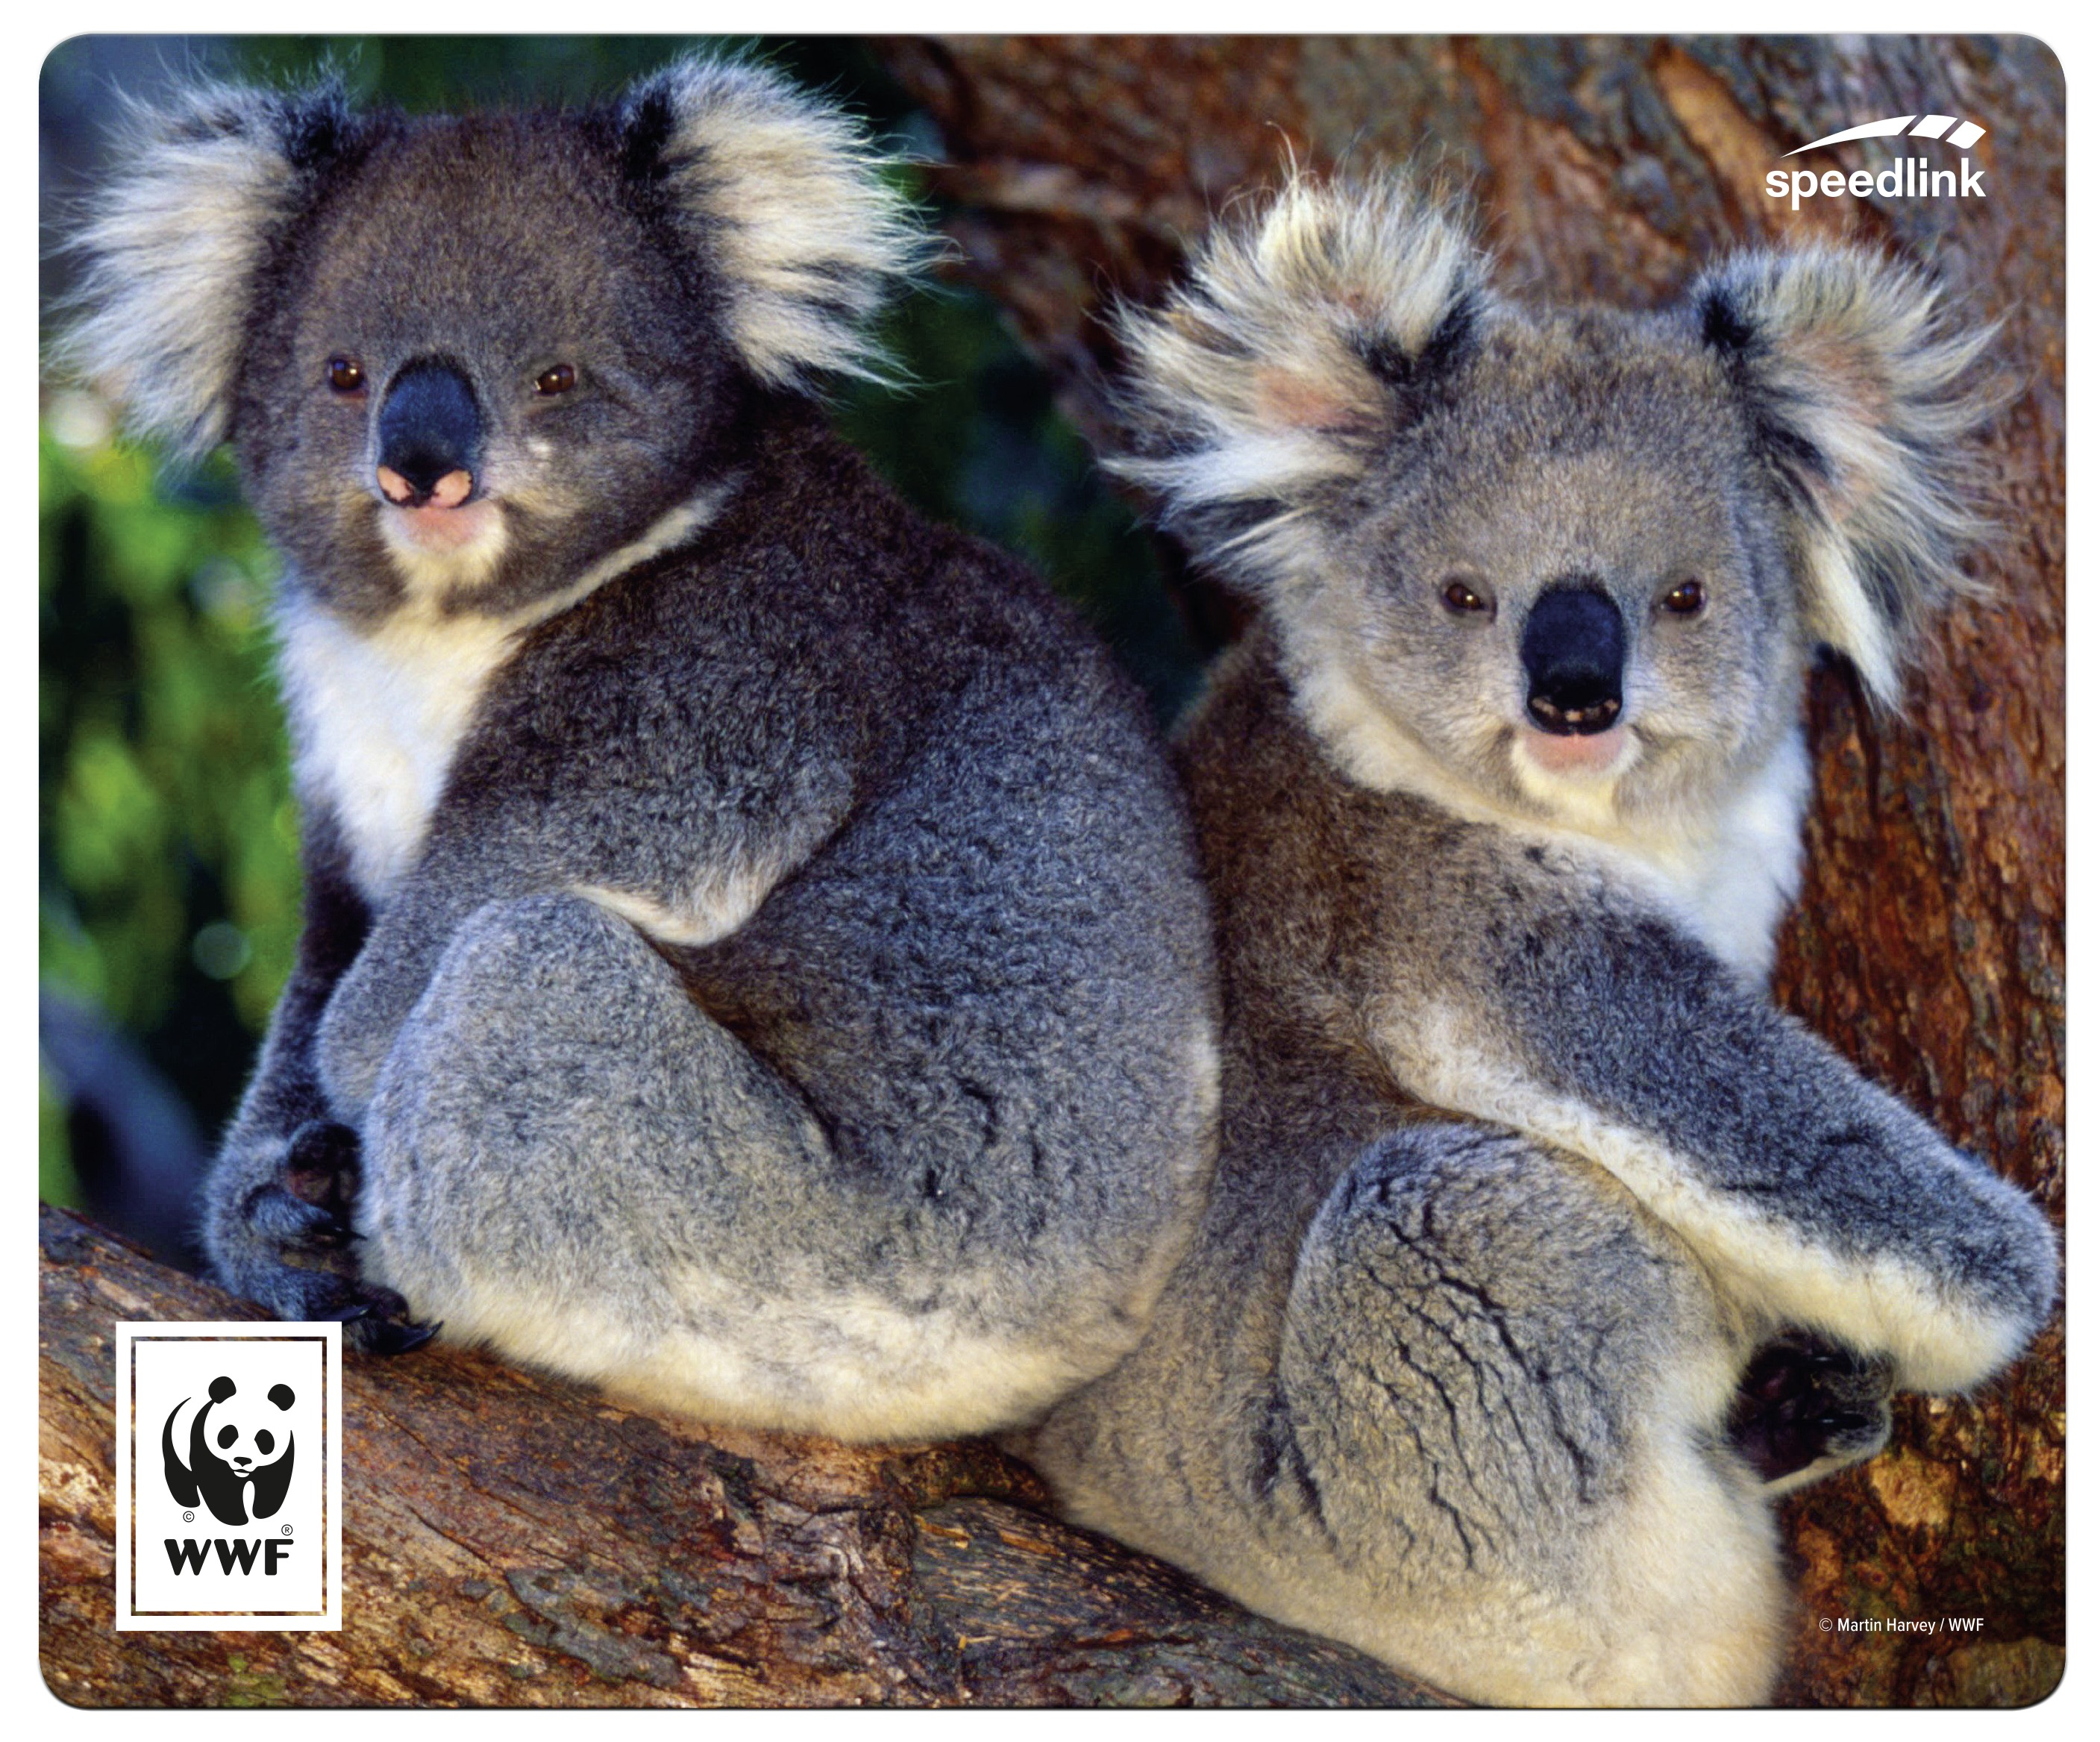 TERRA Mehrfarbig Koala, WWF SPEEDLINK